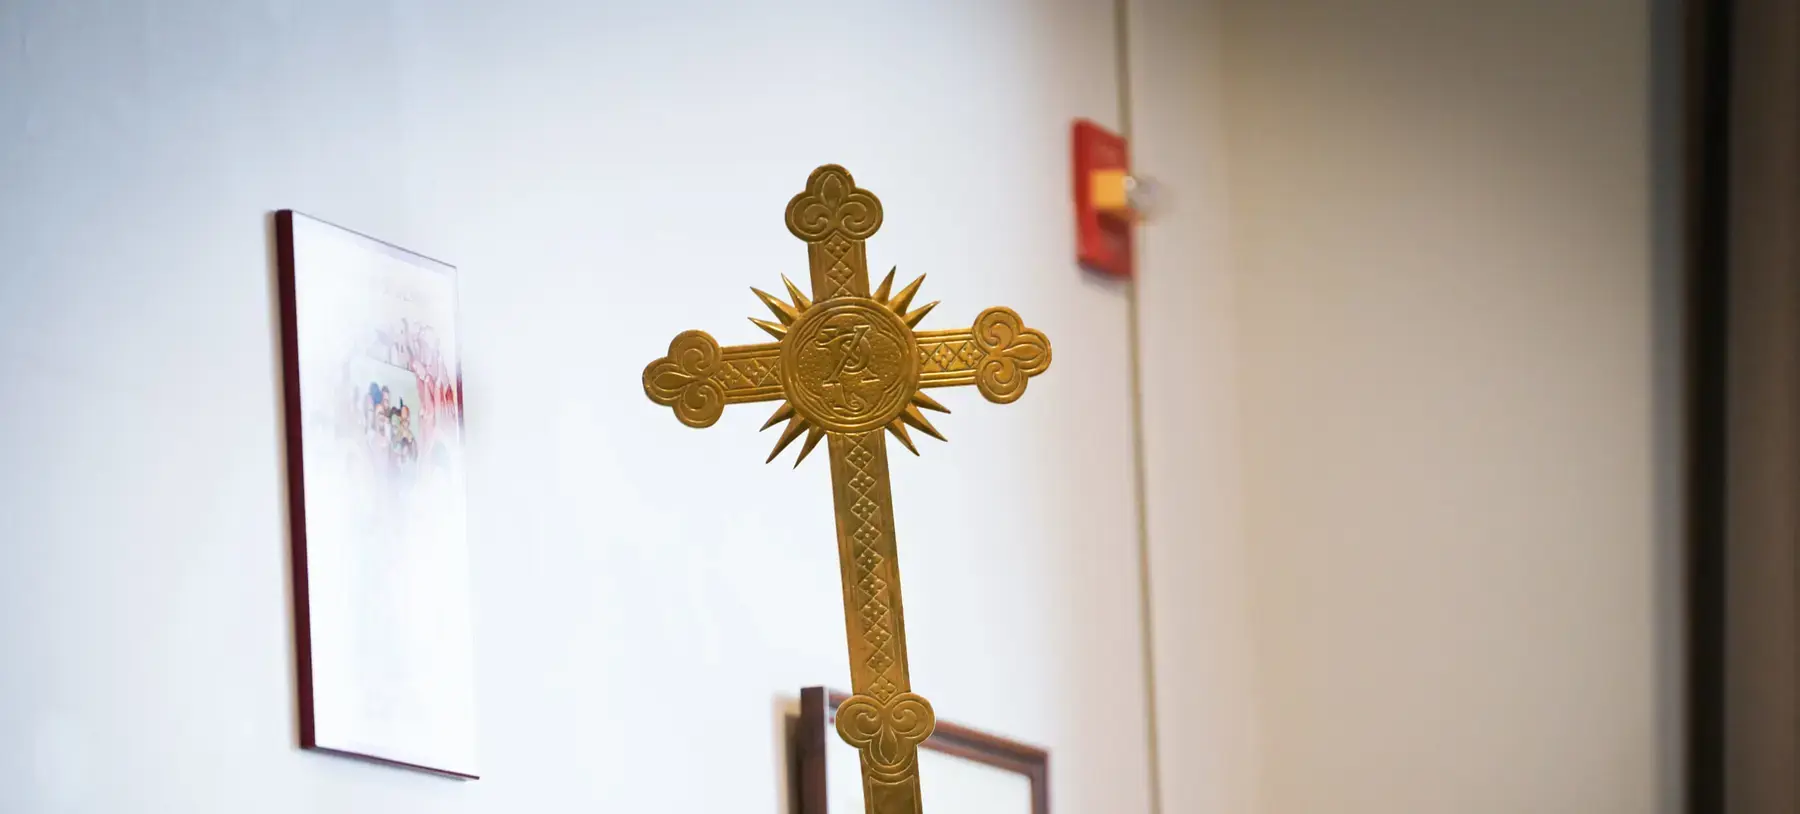 Porter-Gaud processional cross